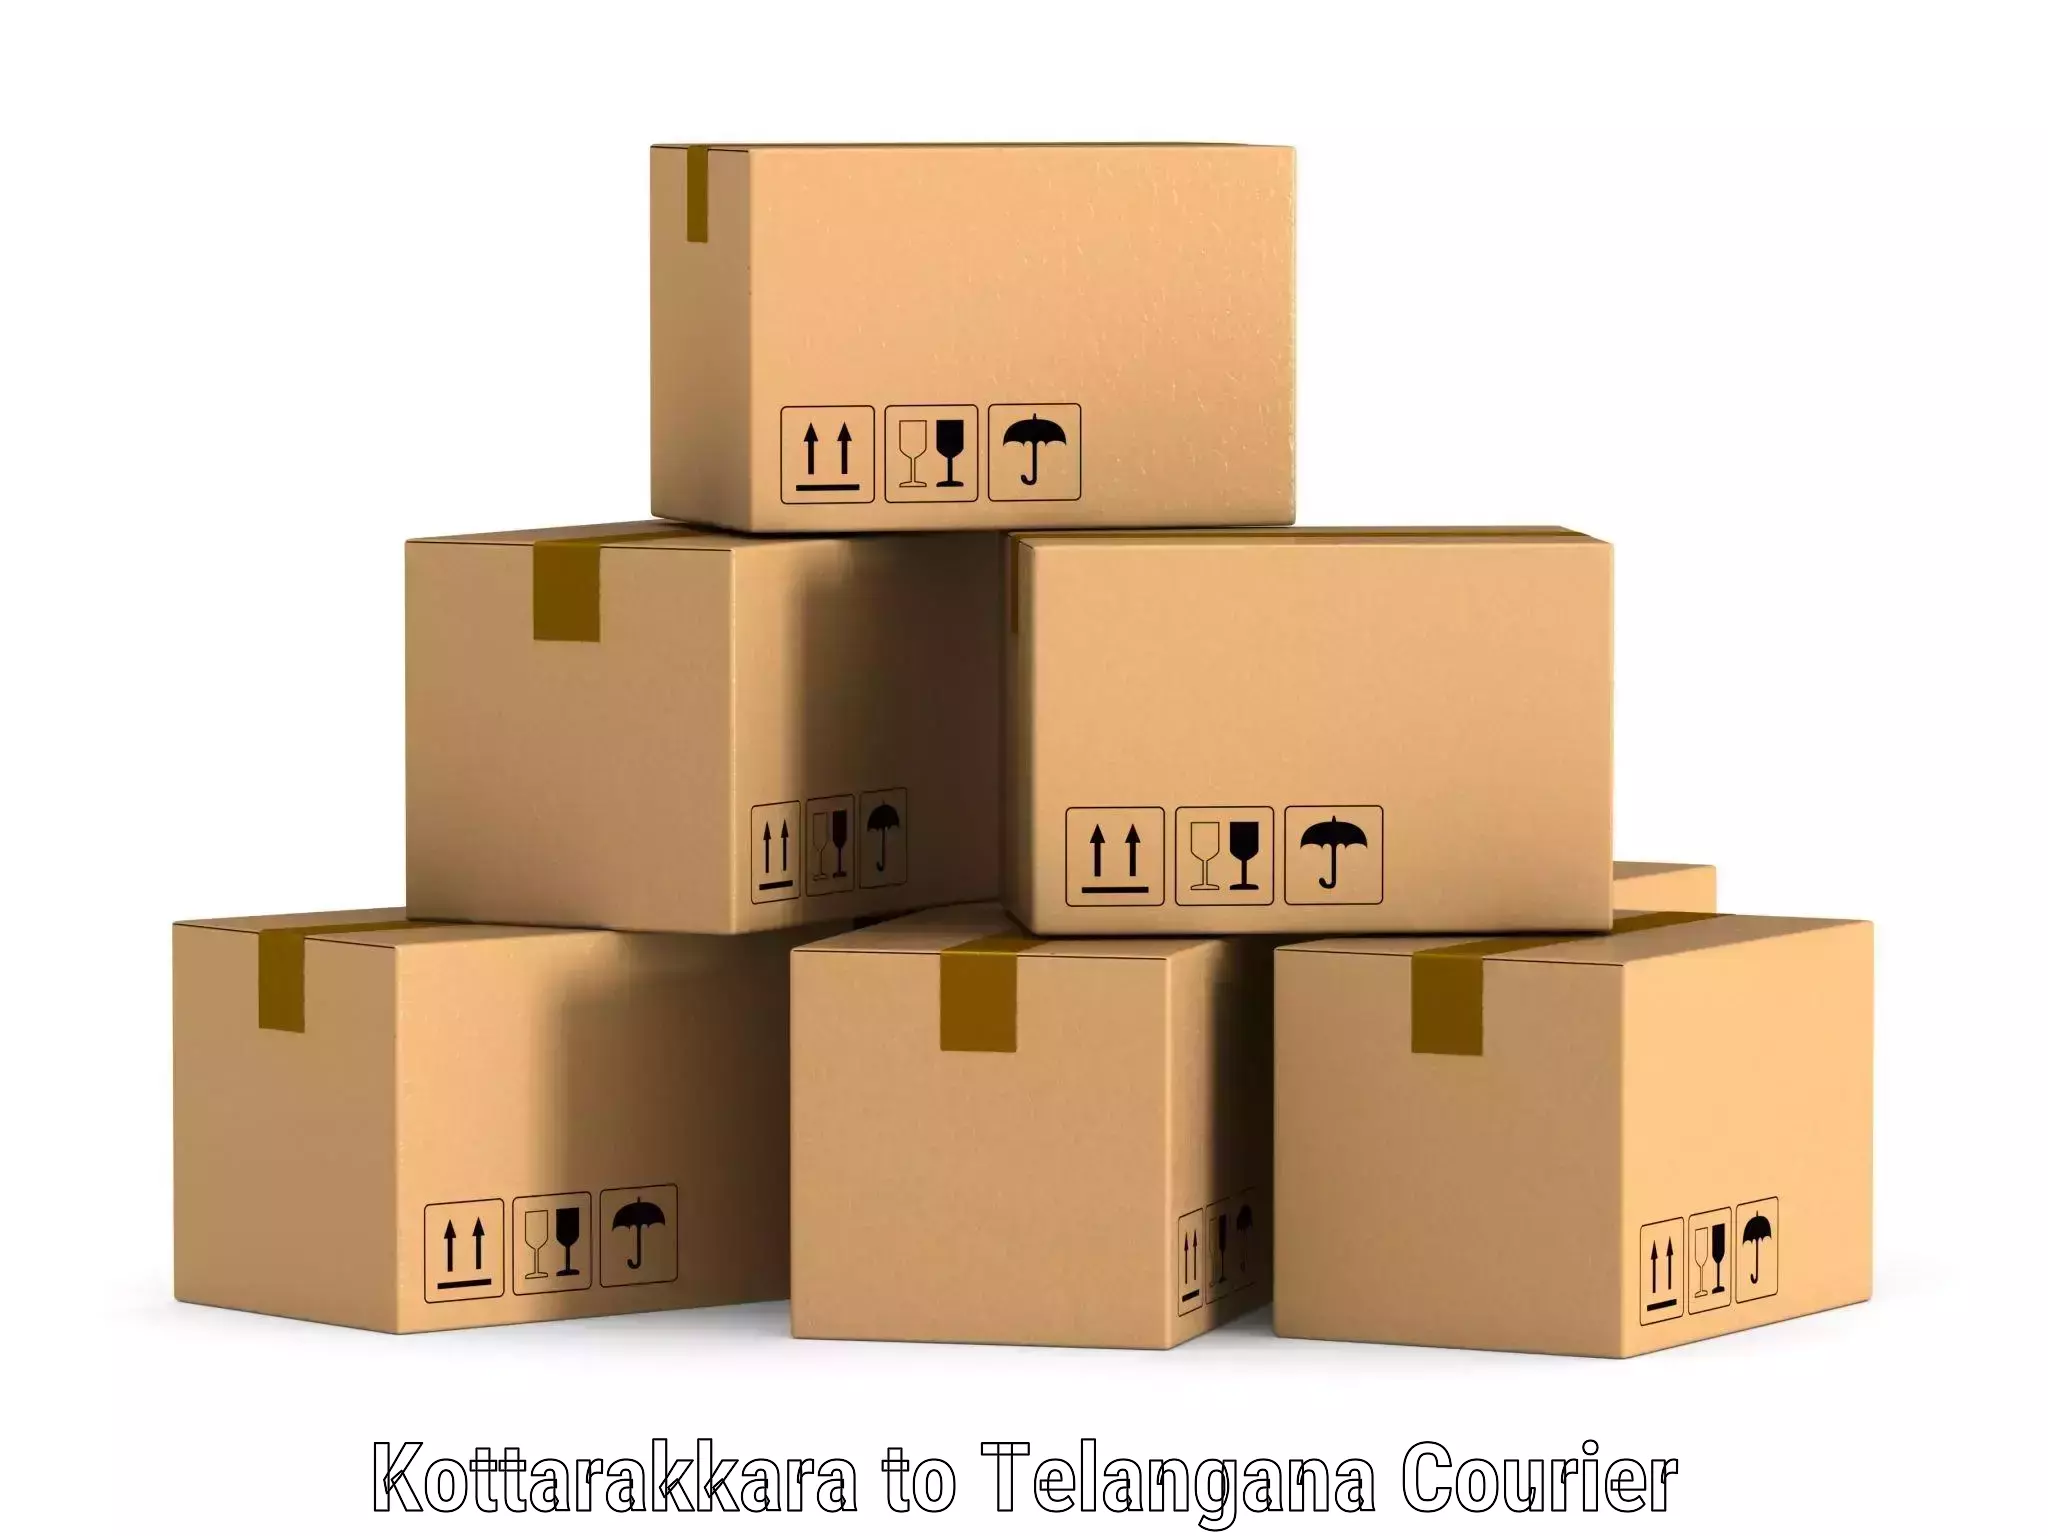 Supply chain delivery in Kottarakkara to Telangana